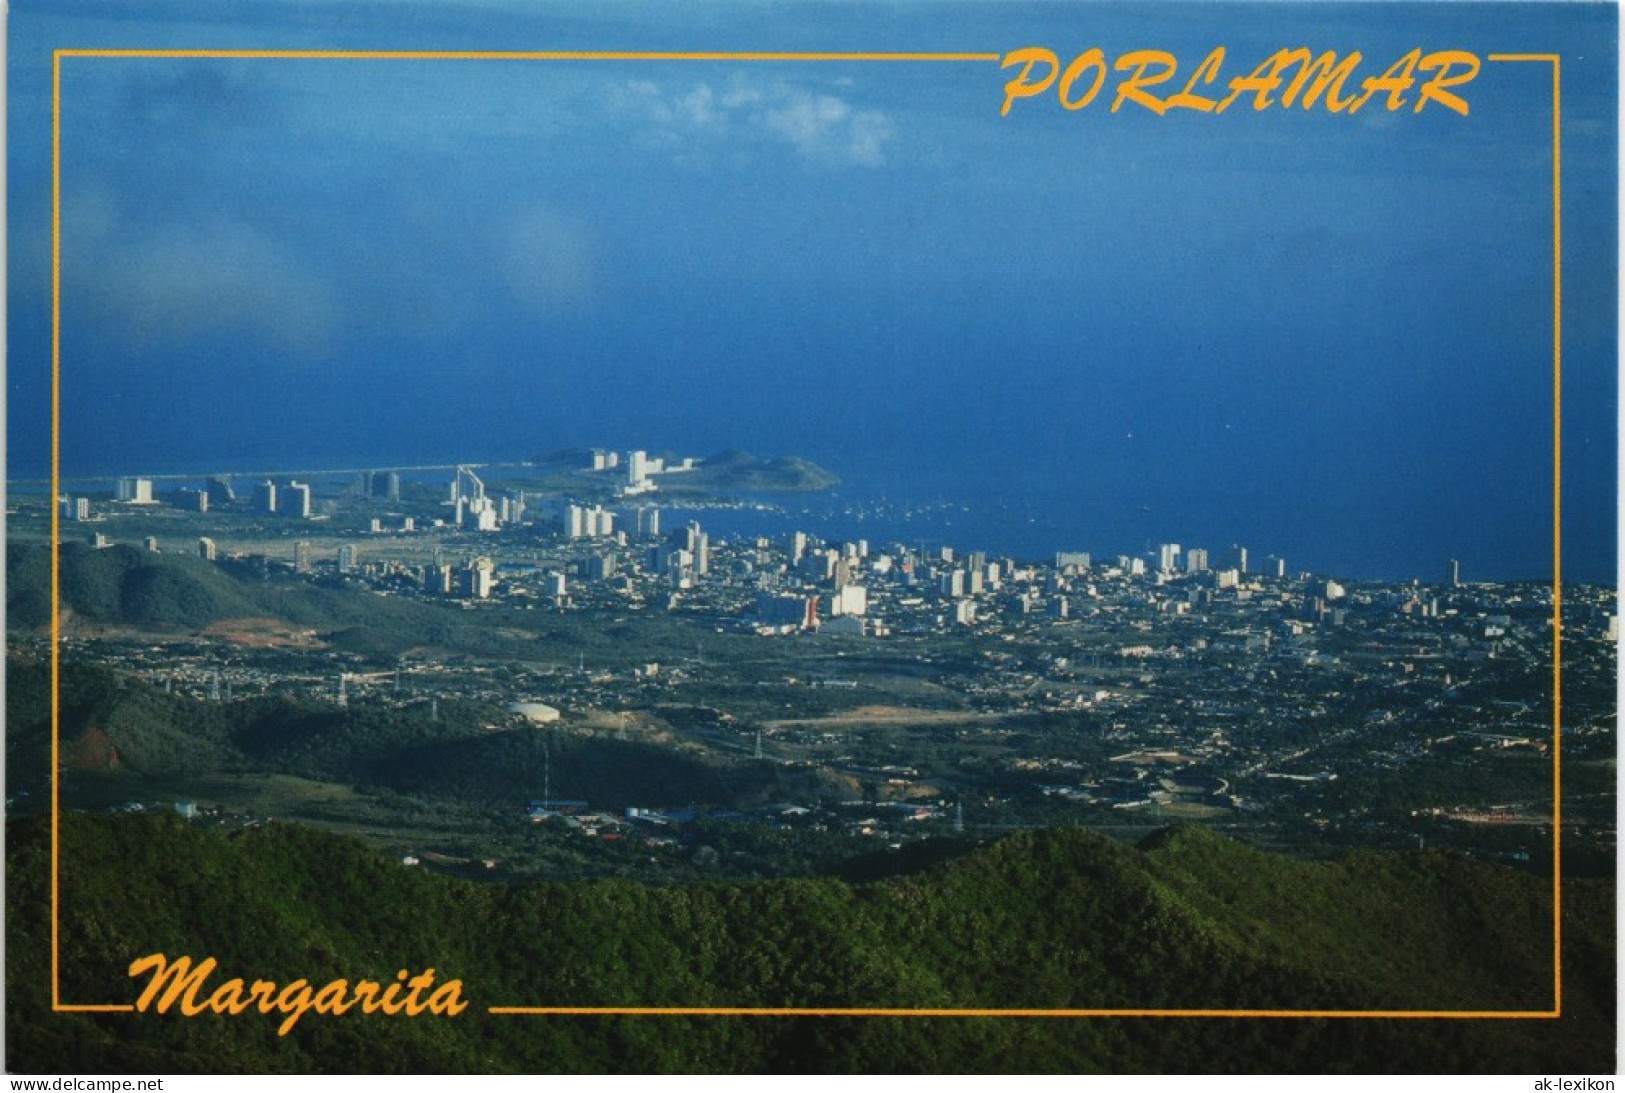 Postcard Porlamar PORLAMAR Margarita Luftbild-AK Aerial View City 1990 - Venezuela